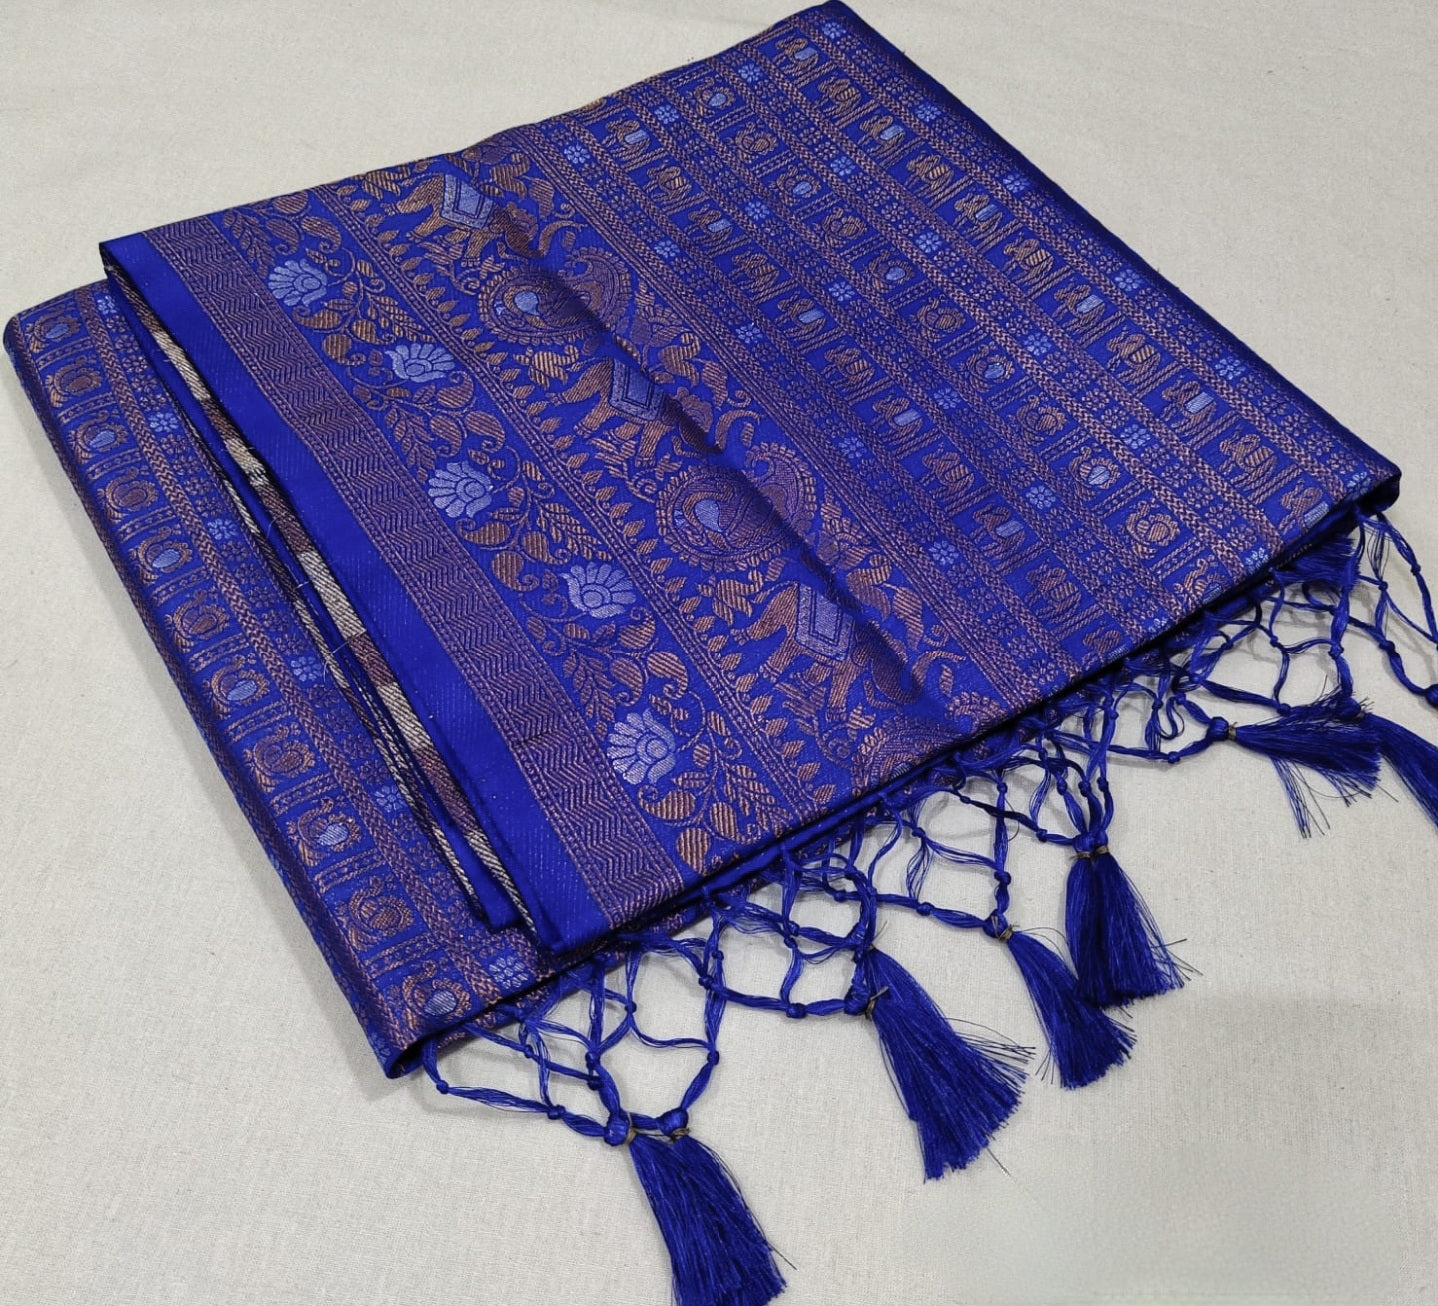 Soft silk banarasi x Copper & Siiver Zari Saree - Blue